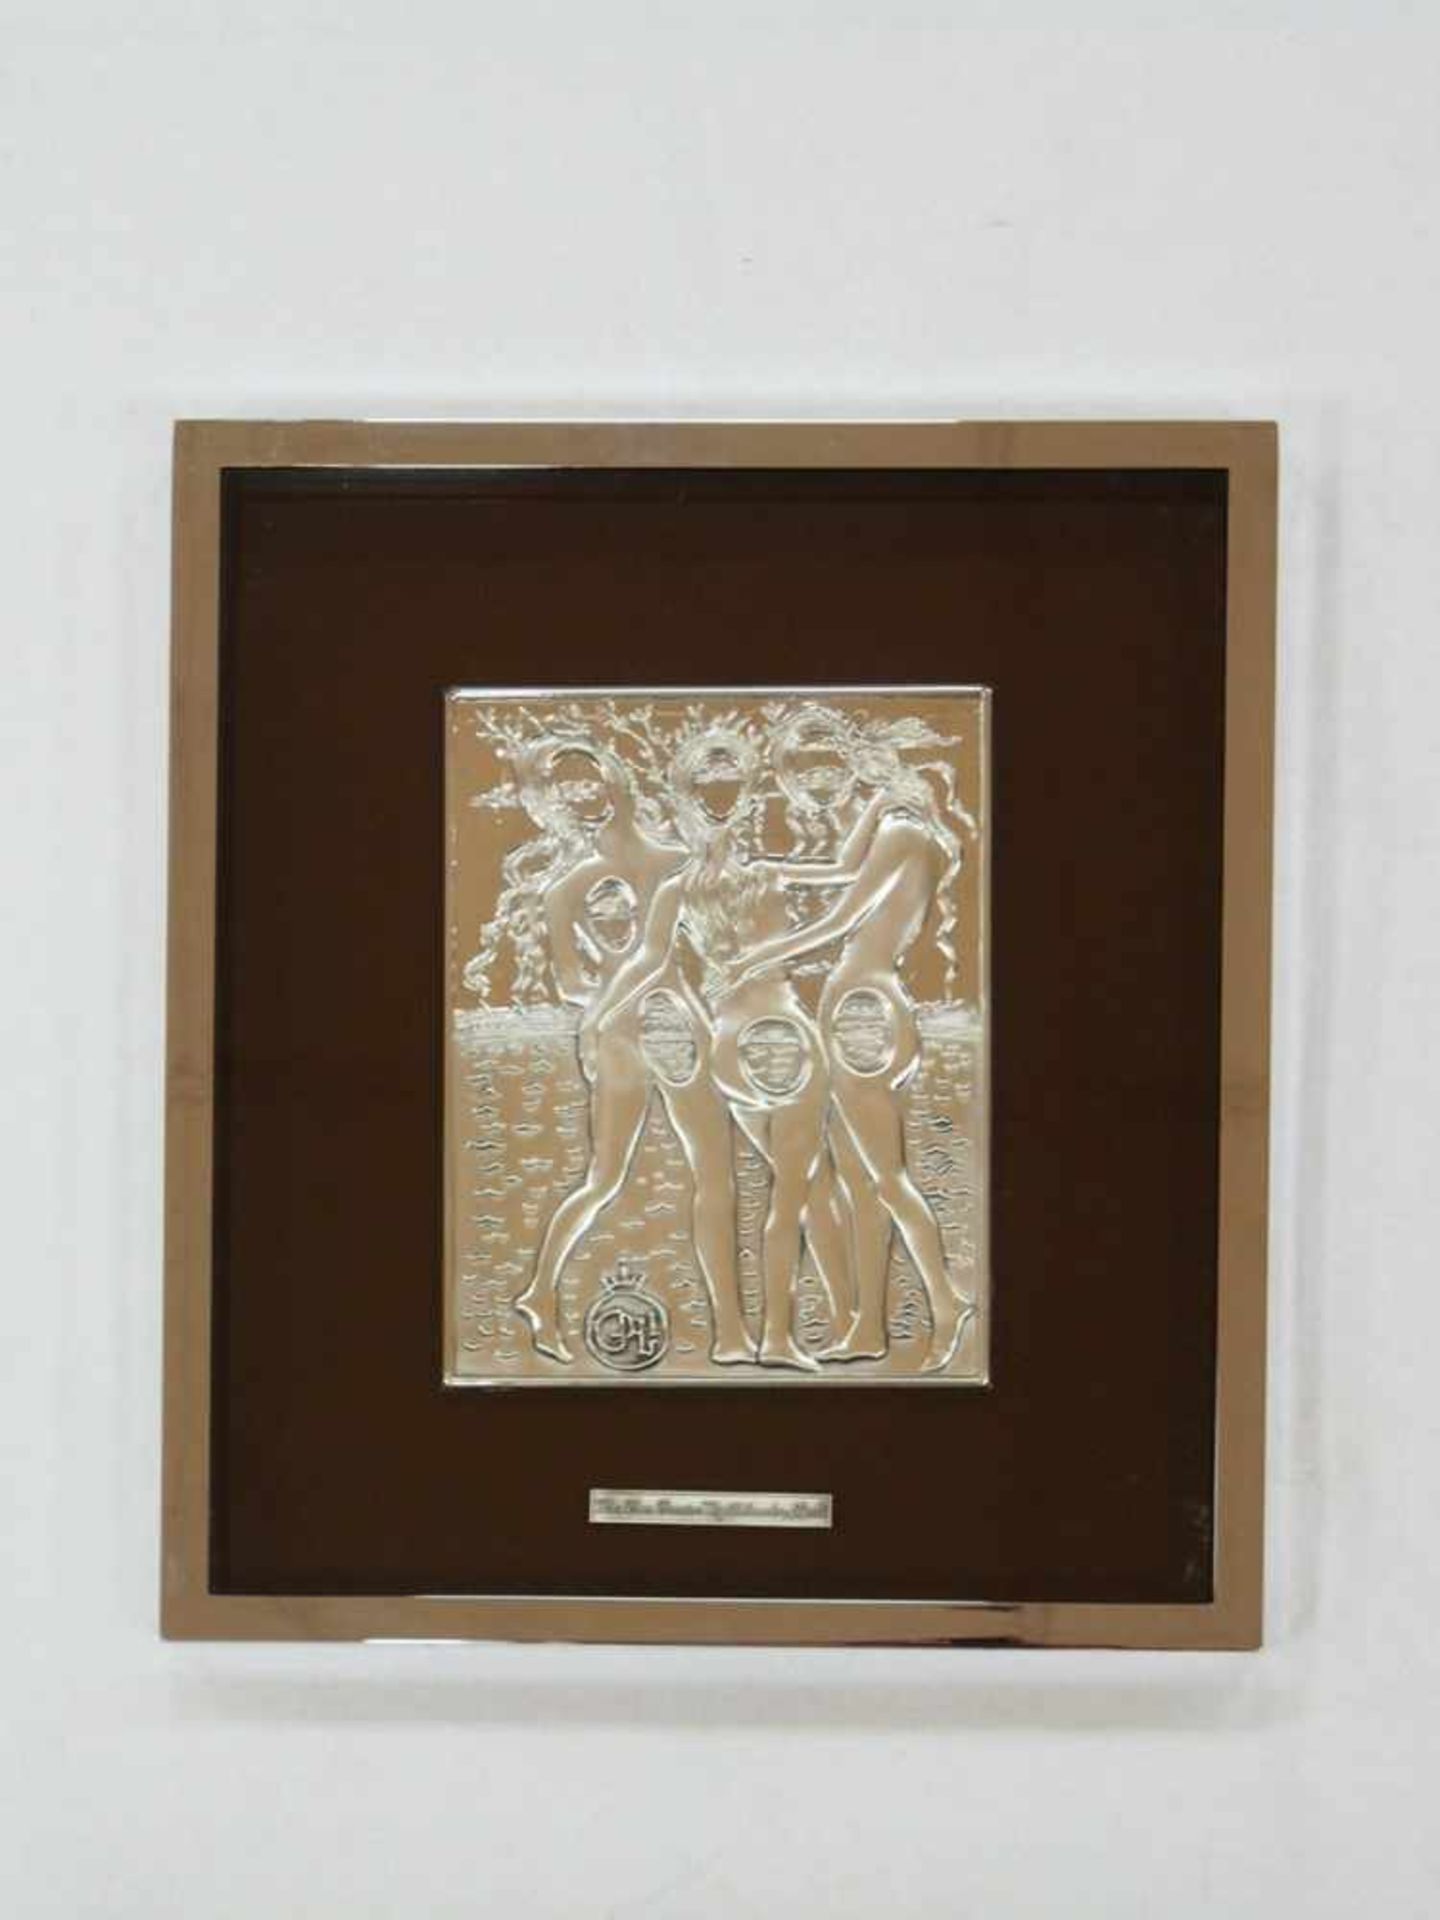 DALI, Salvador1904-1989Las Tres GraciasRelief 925er Silber, 16,8 x 22,1 cm, Gewicht 250 g, Ex. - Bild 2 aus 3